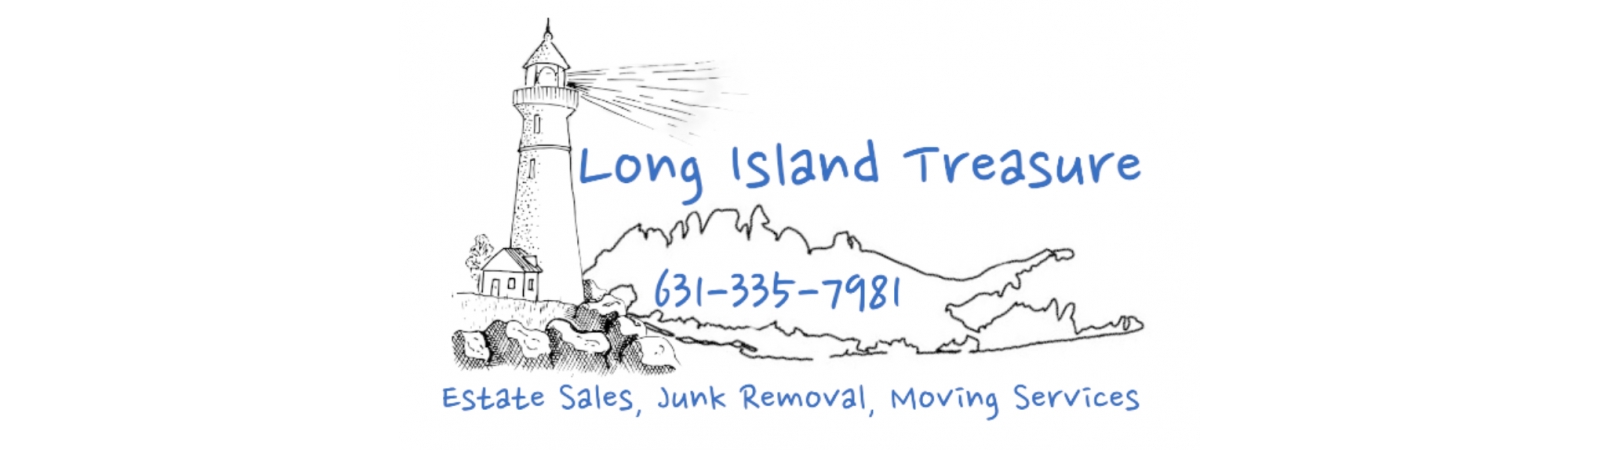 Long Island Treasure | AuctionNinja